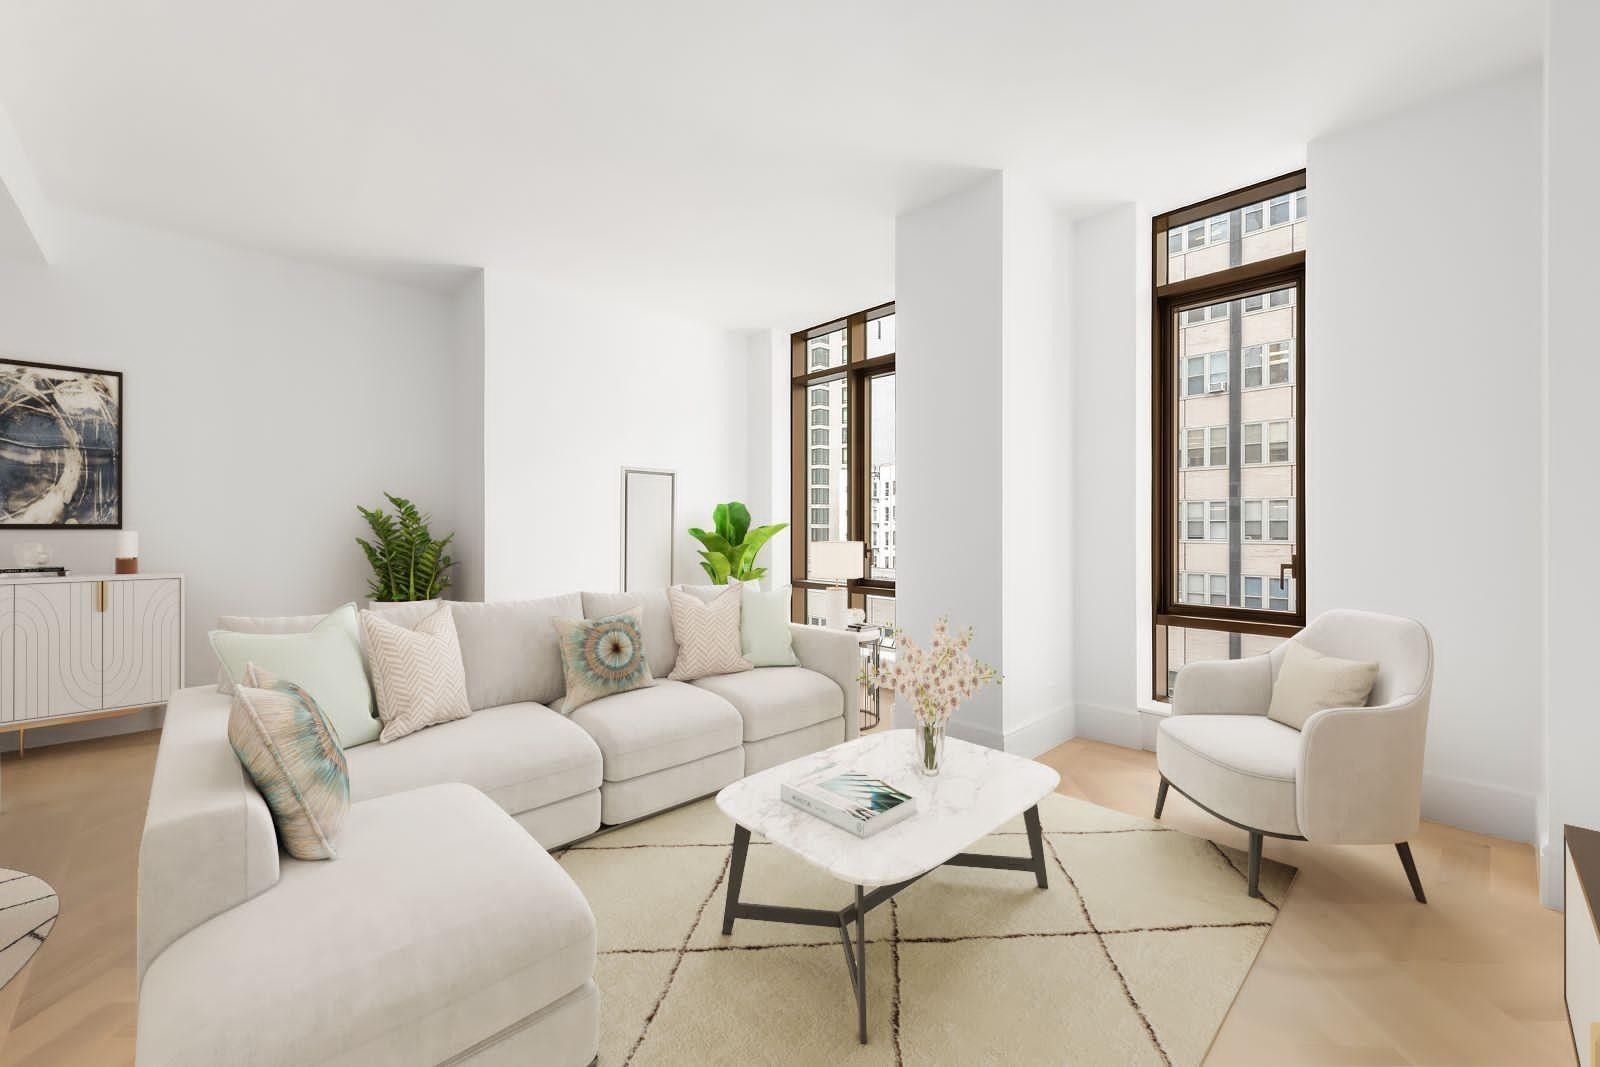 Condominium for Sale at Gramercy Square, 215 E 19TH ST, 4F Gramercy Park, New York, NY 10003